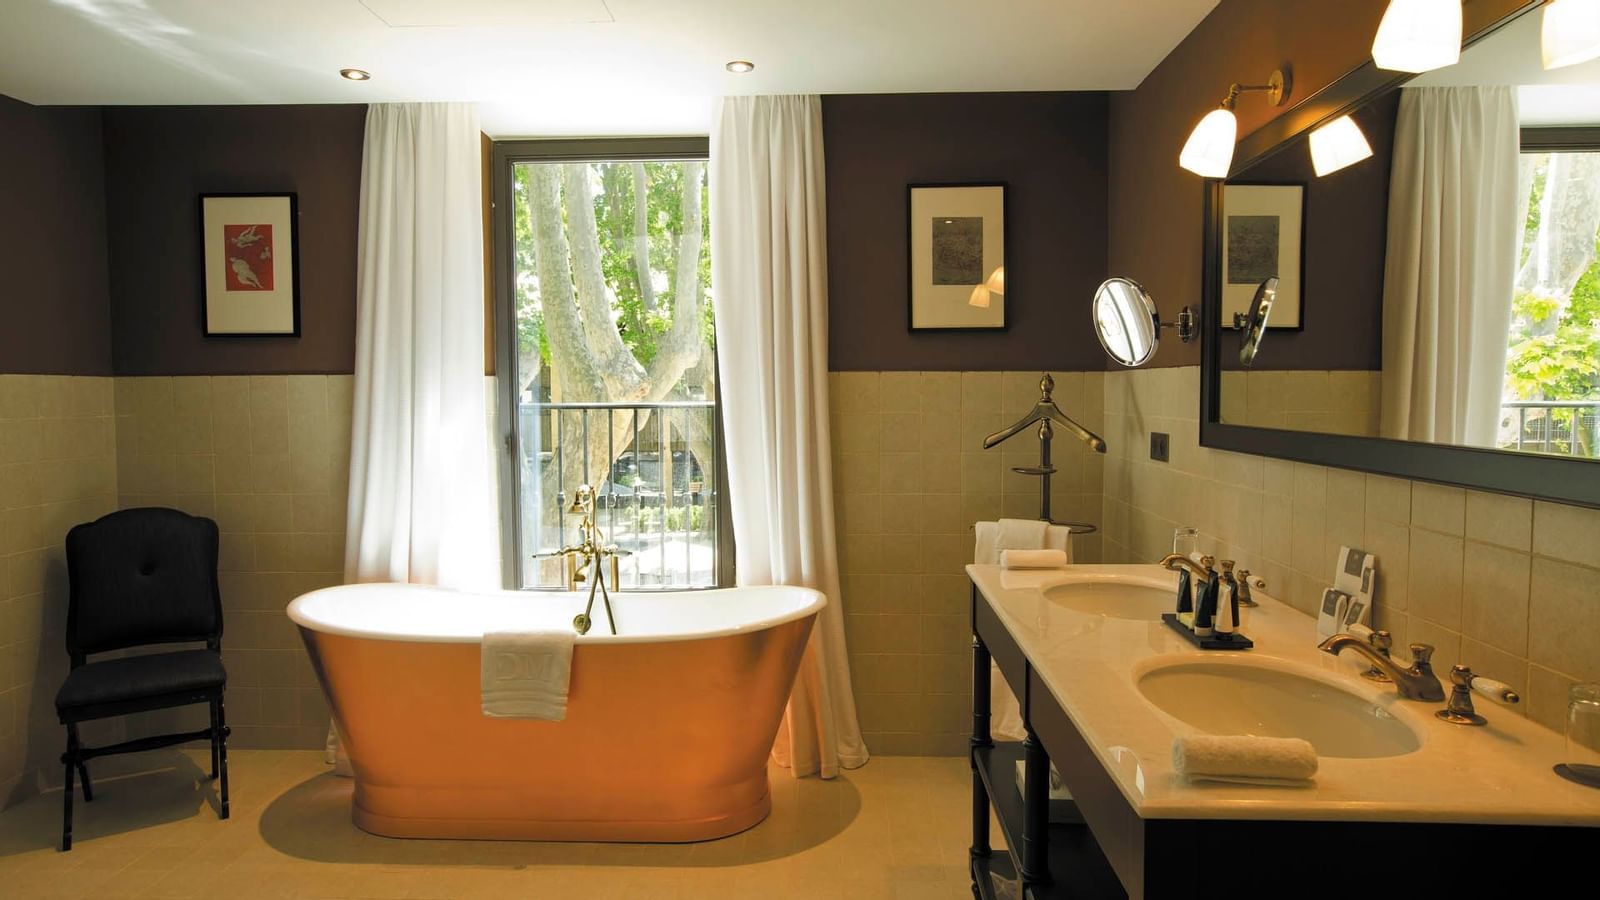 Bathtub & vanity in Manville Suite at Domaine de Manville